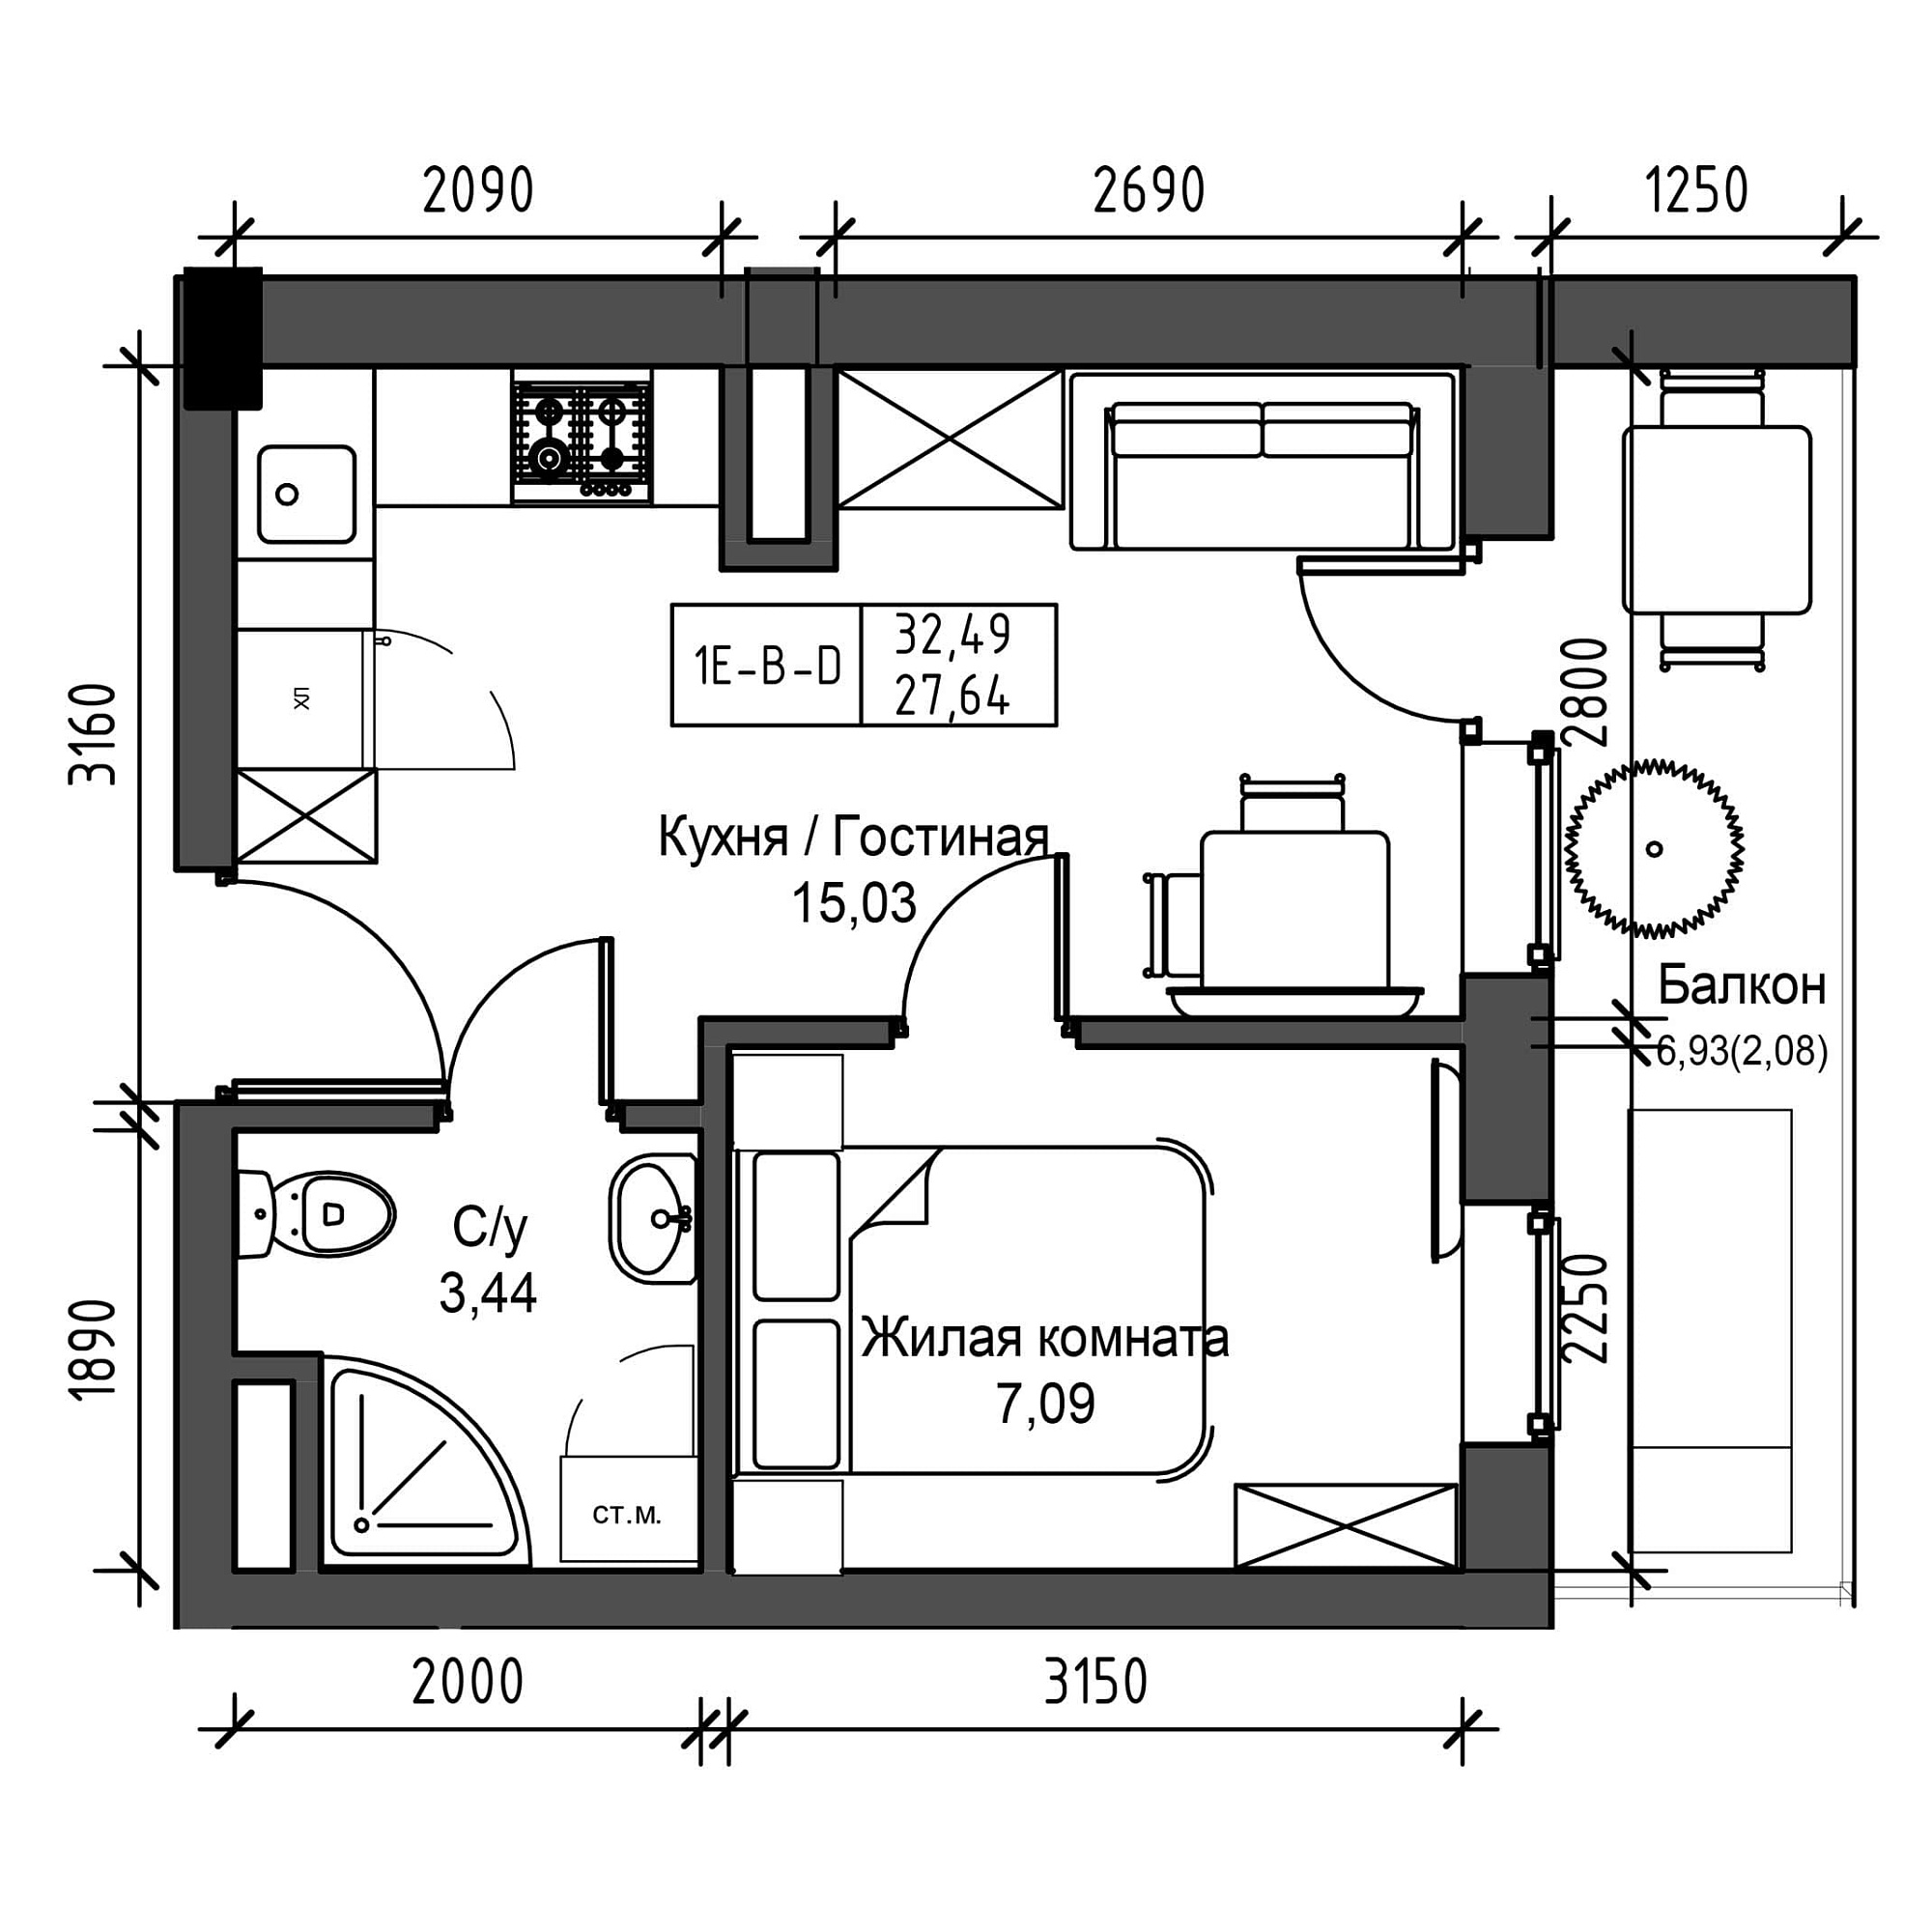 Планування 1-к квартира площею 27.64м2, UM-001-05/0001.